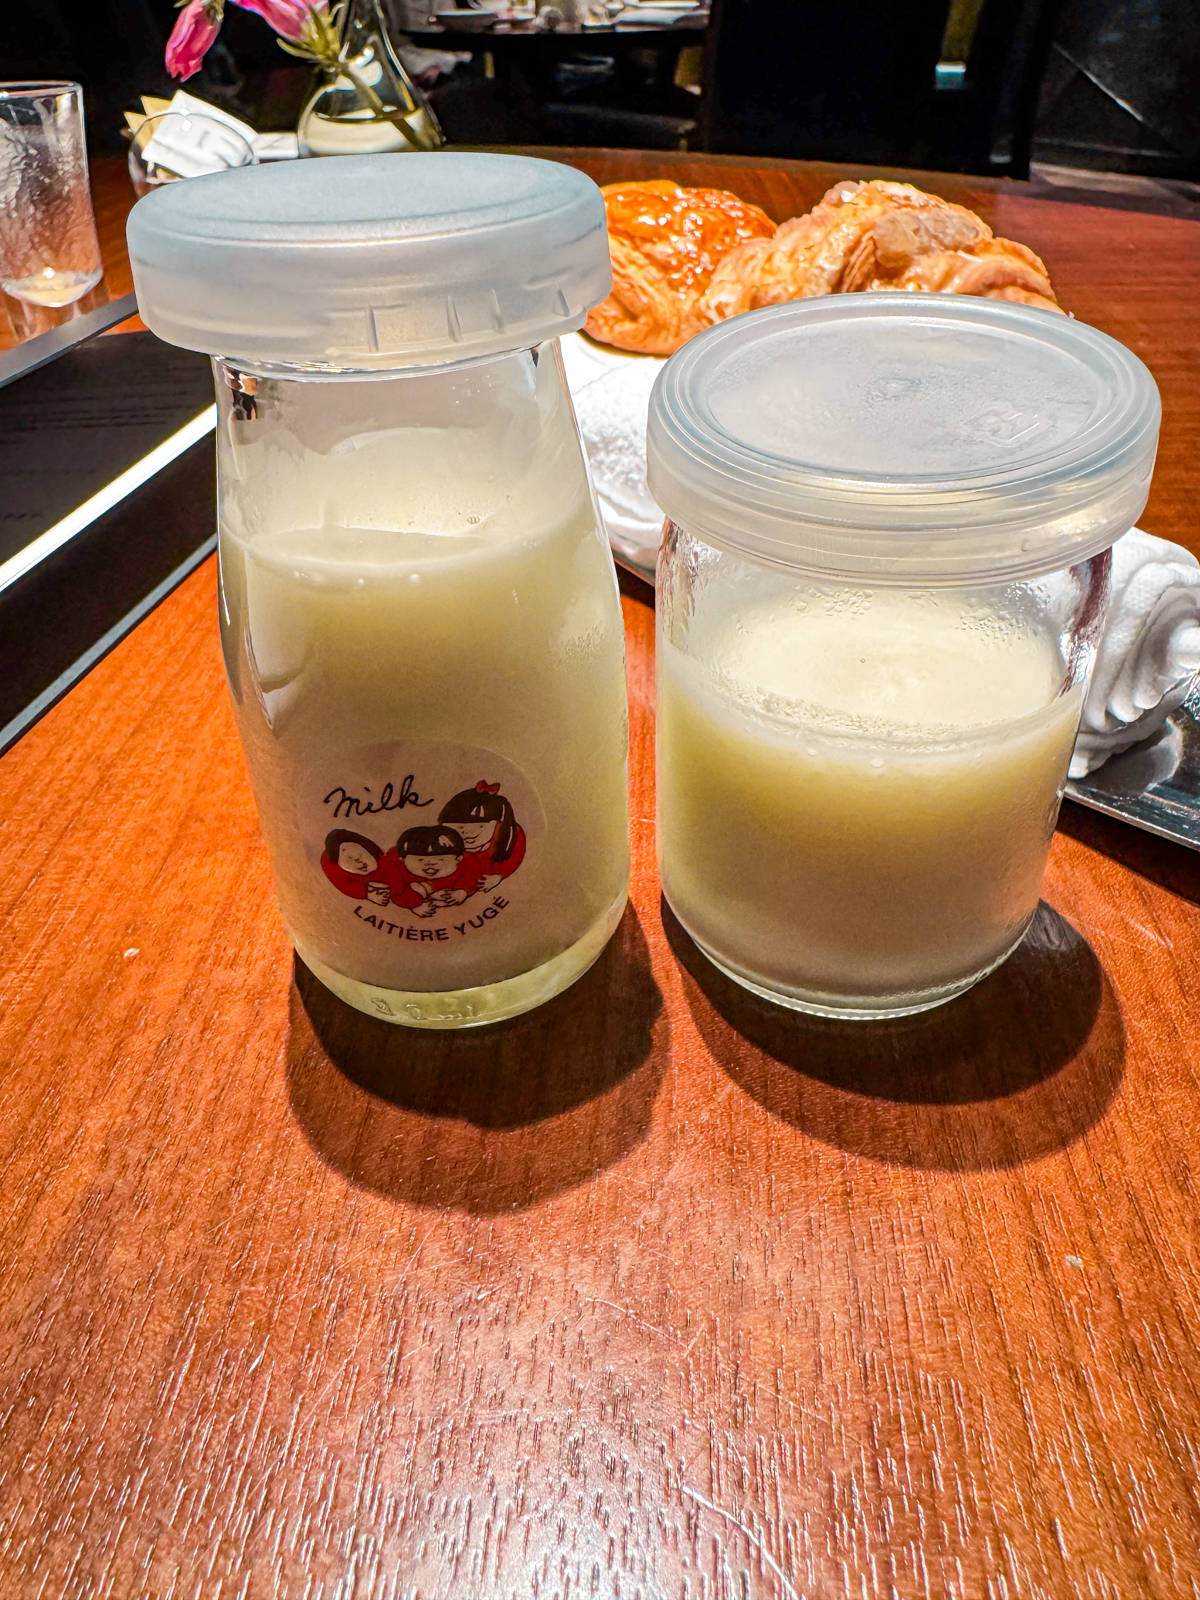 2 glass jars of milk from Yuge farm.